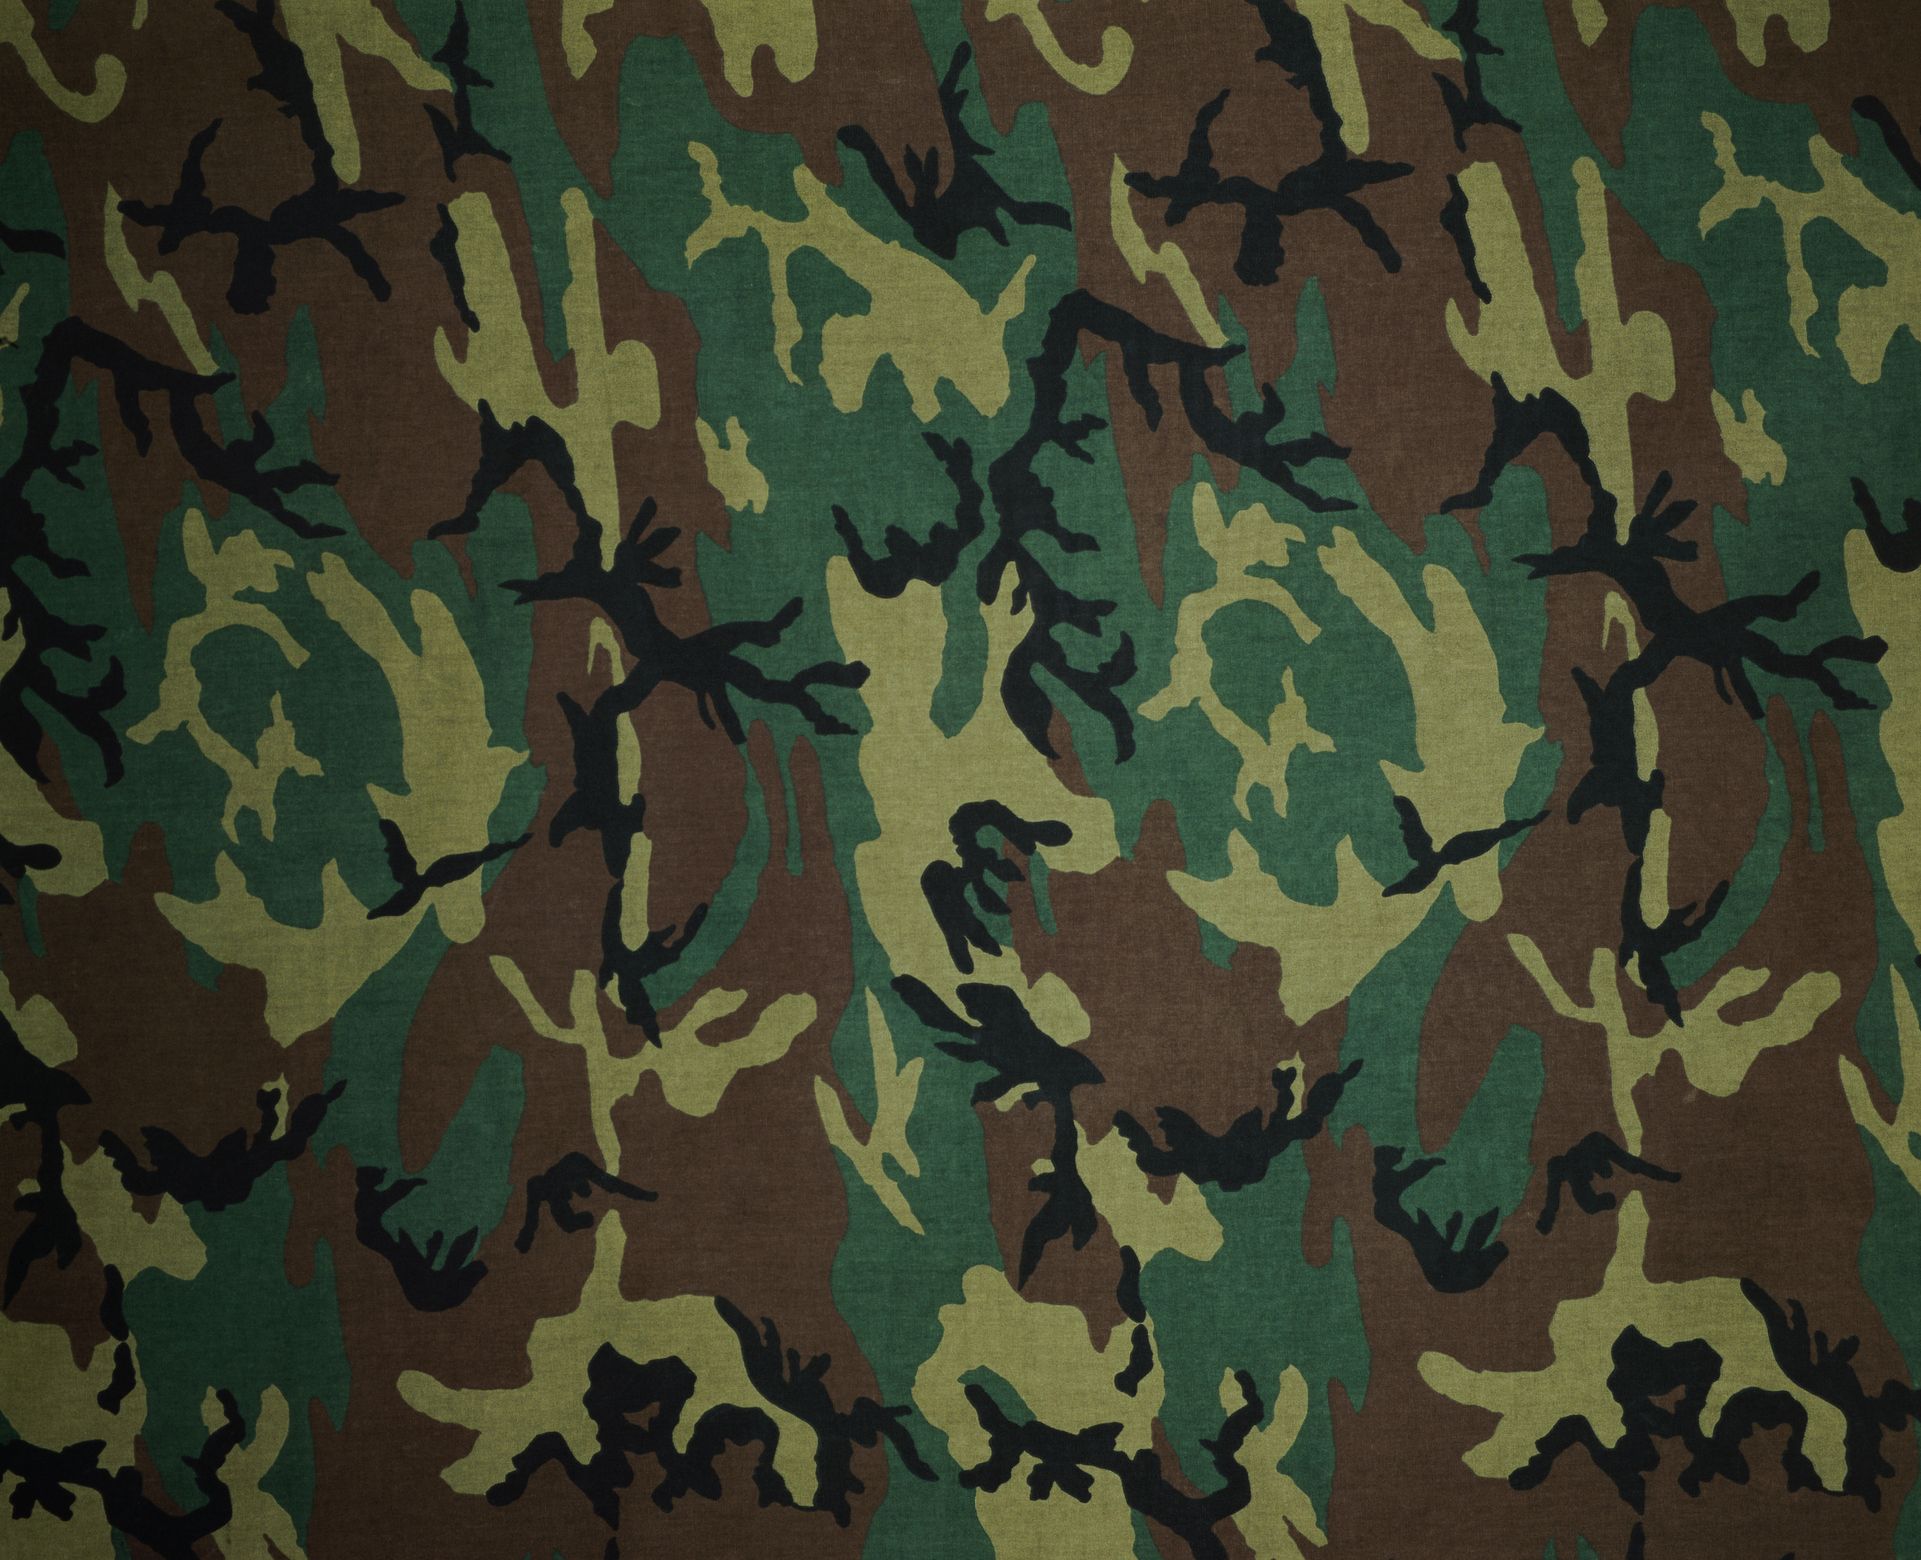 Camouflage (Camo) Print Traditional Army Military | Art Print